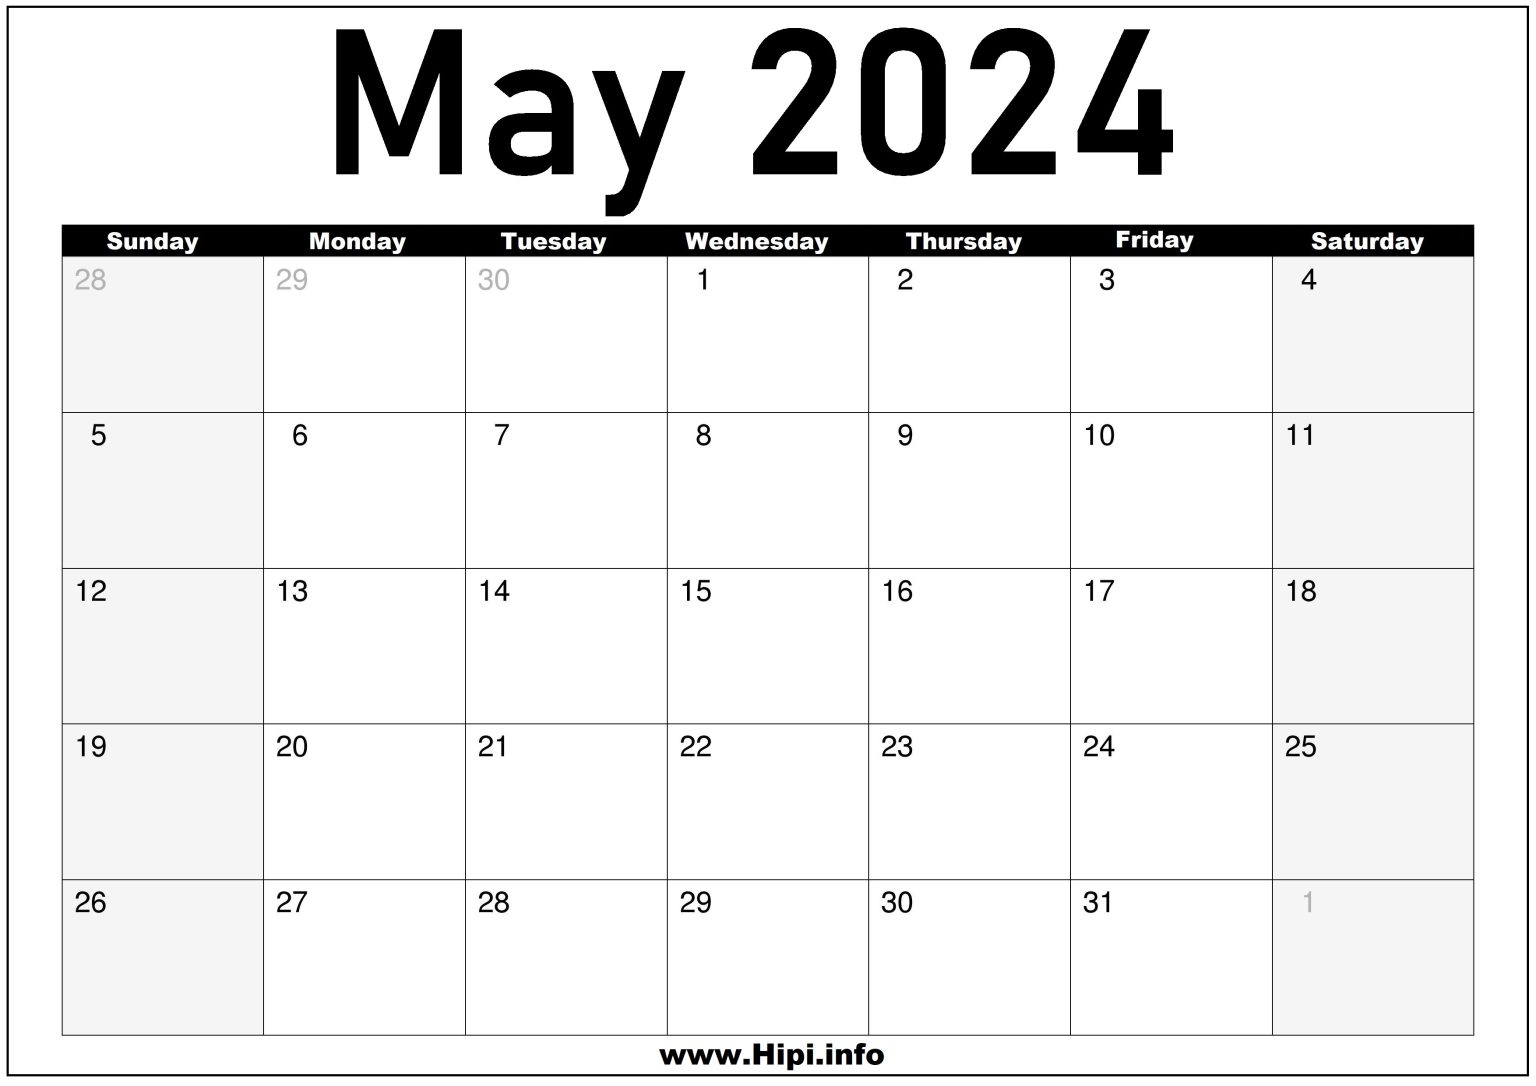 may-2024-calendar-monthly-hipi-info